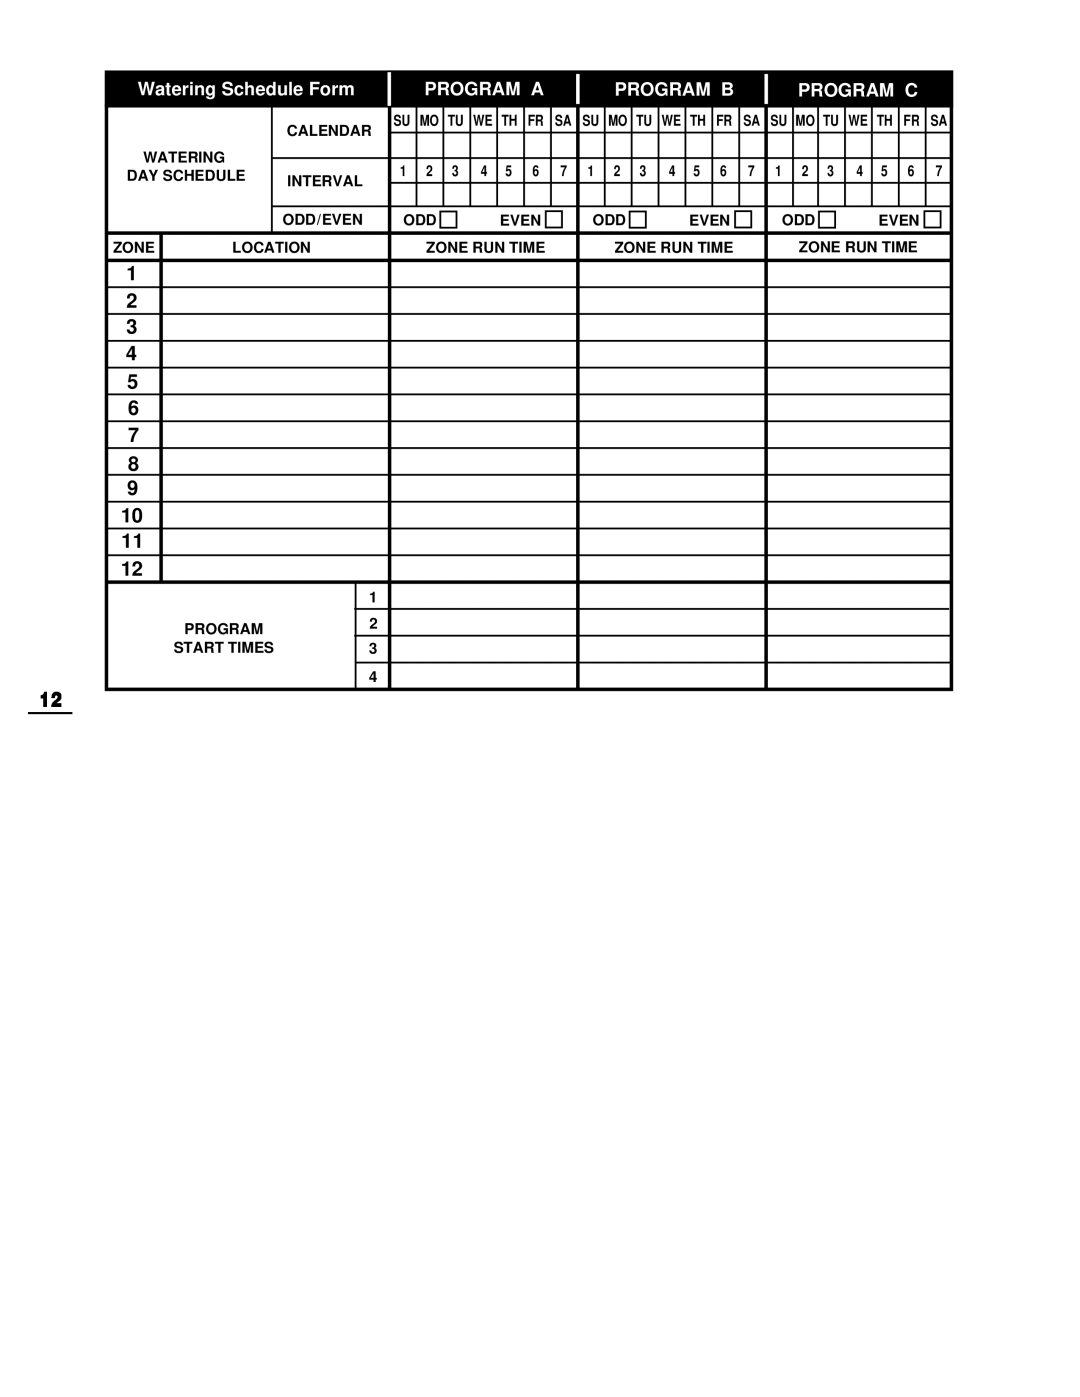 Toro 212 manual 1 2 3 4 5, Watering Schedule Form, Program A, Program B, Program C 